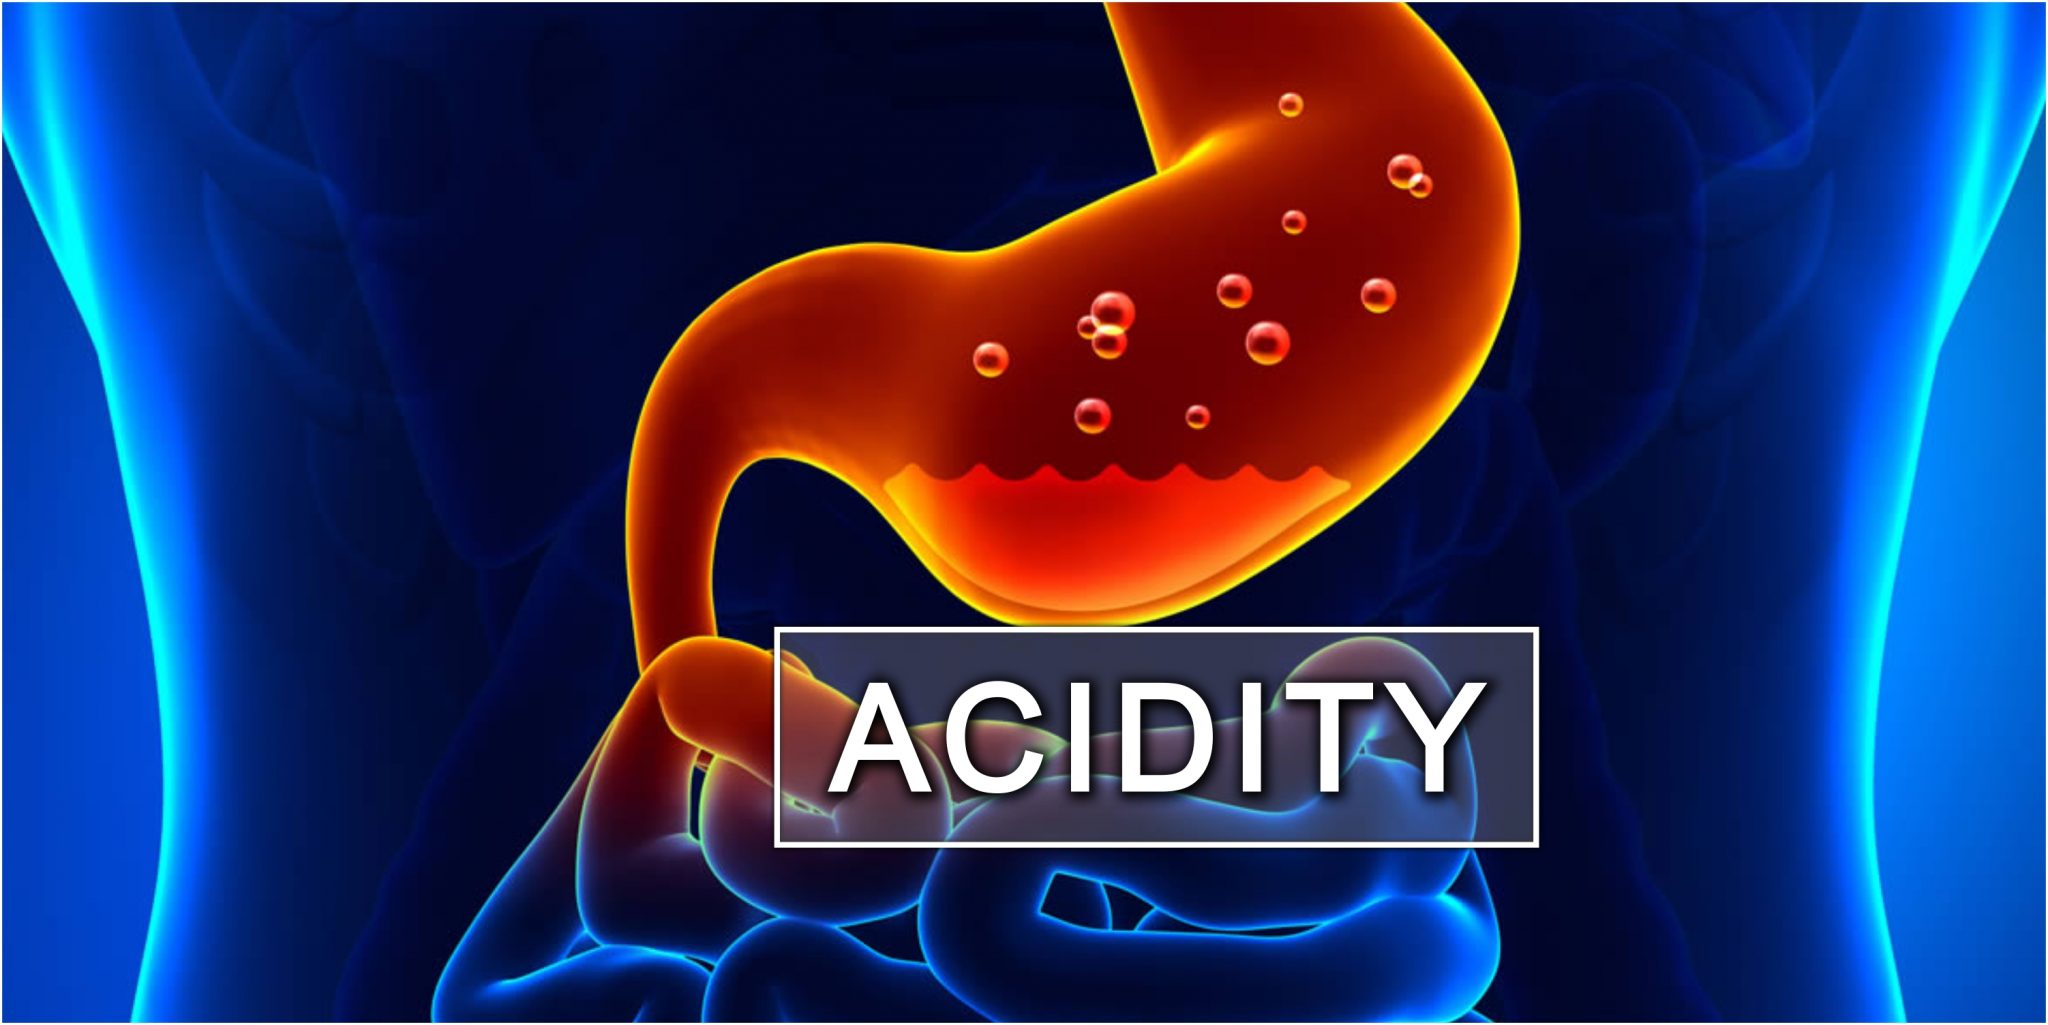 Acidity (Acid peptic disease): Gastritis, H. Pylori, Peptic ulcers, GERD and Hiatus Hernia